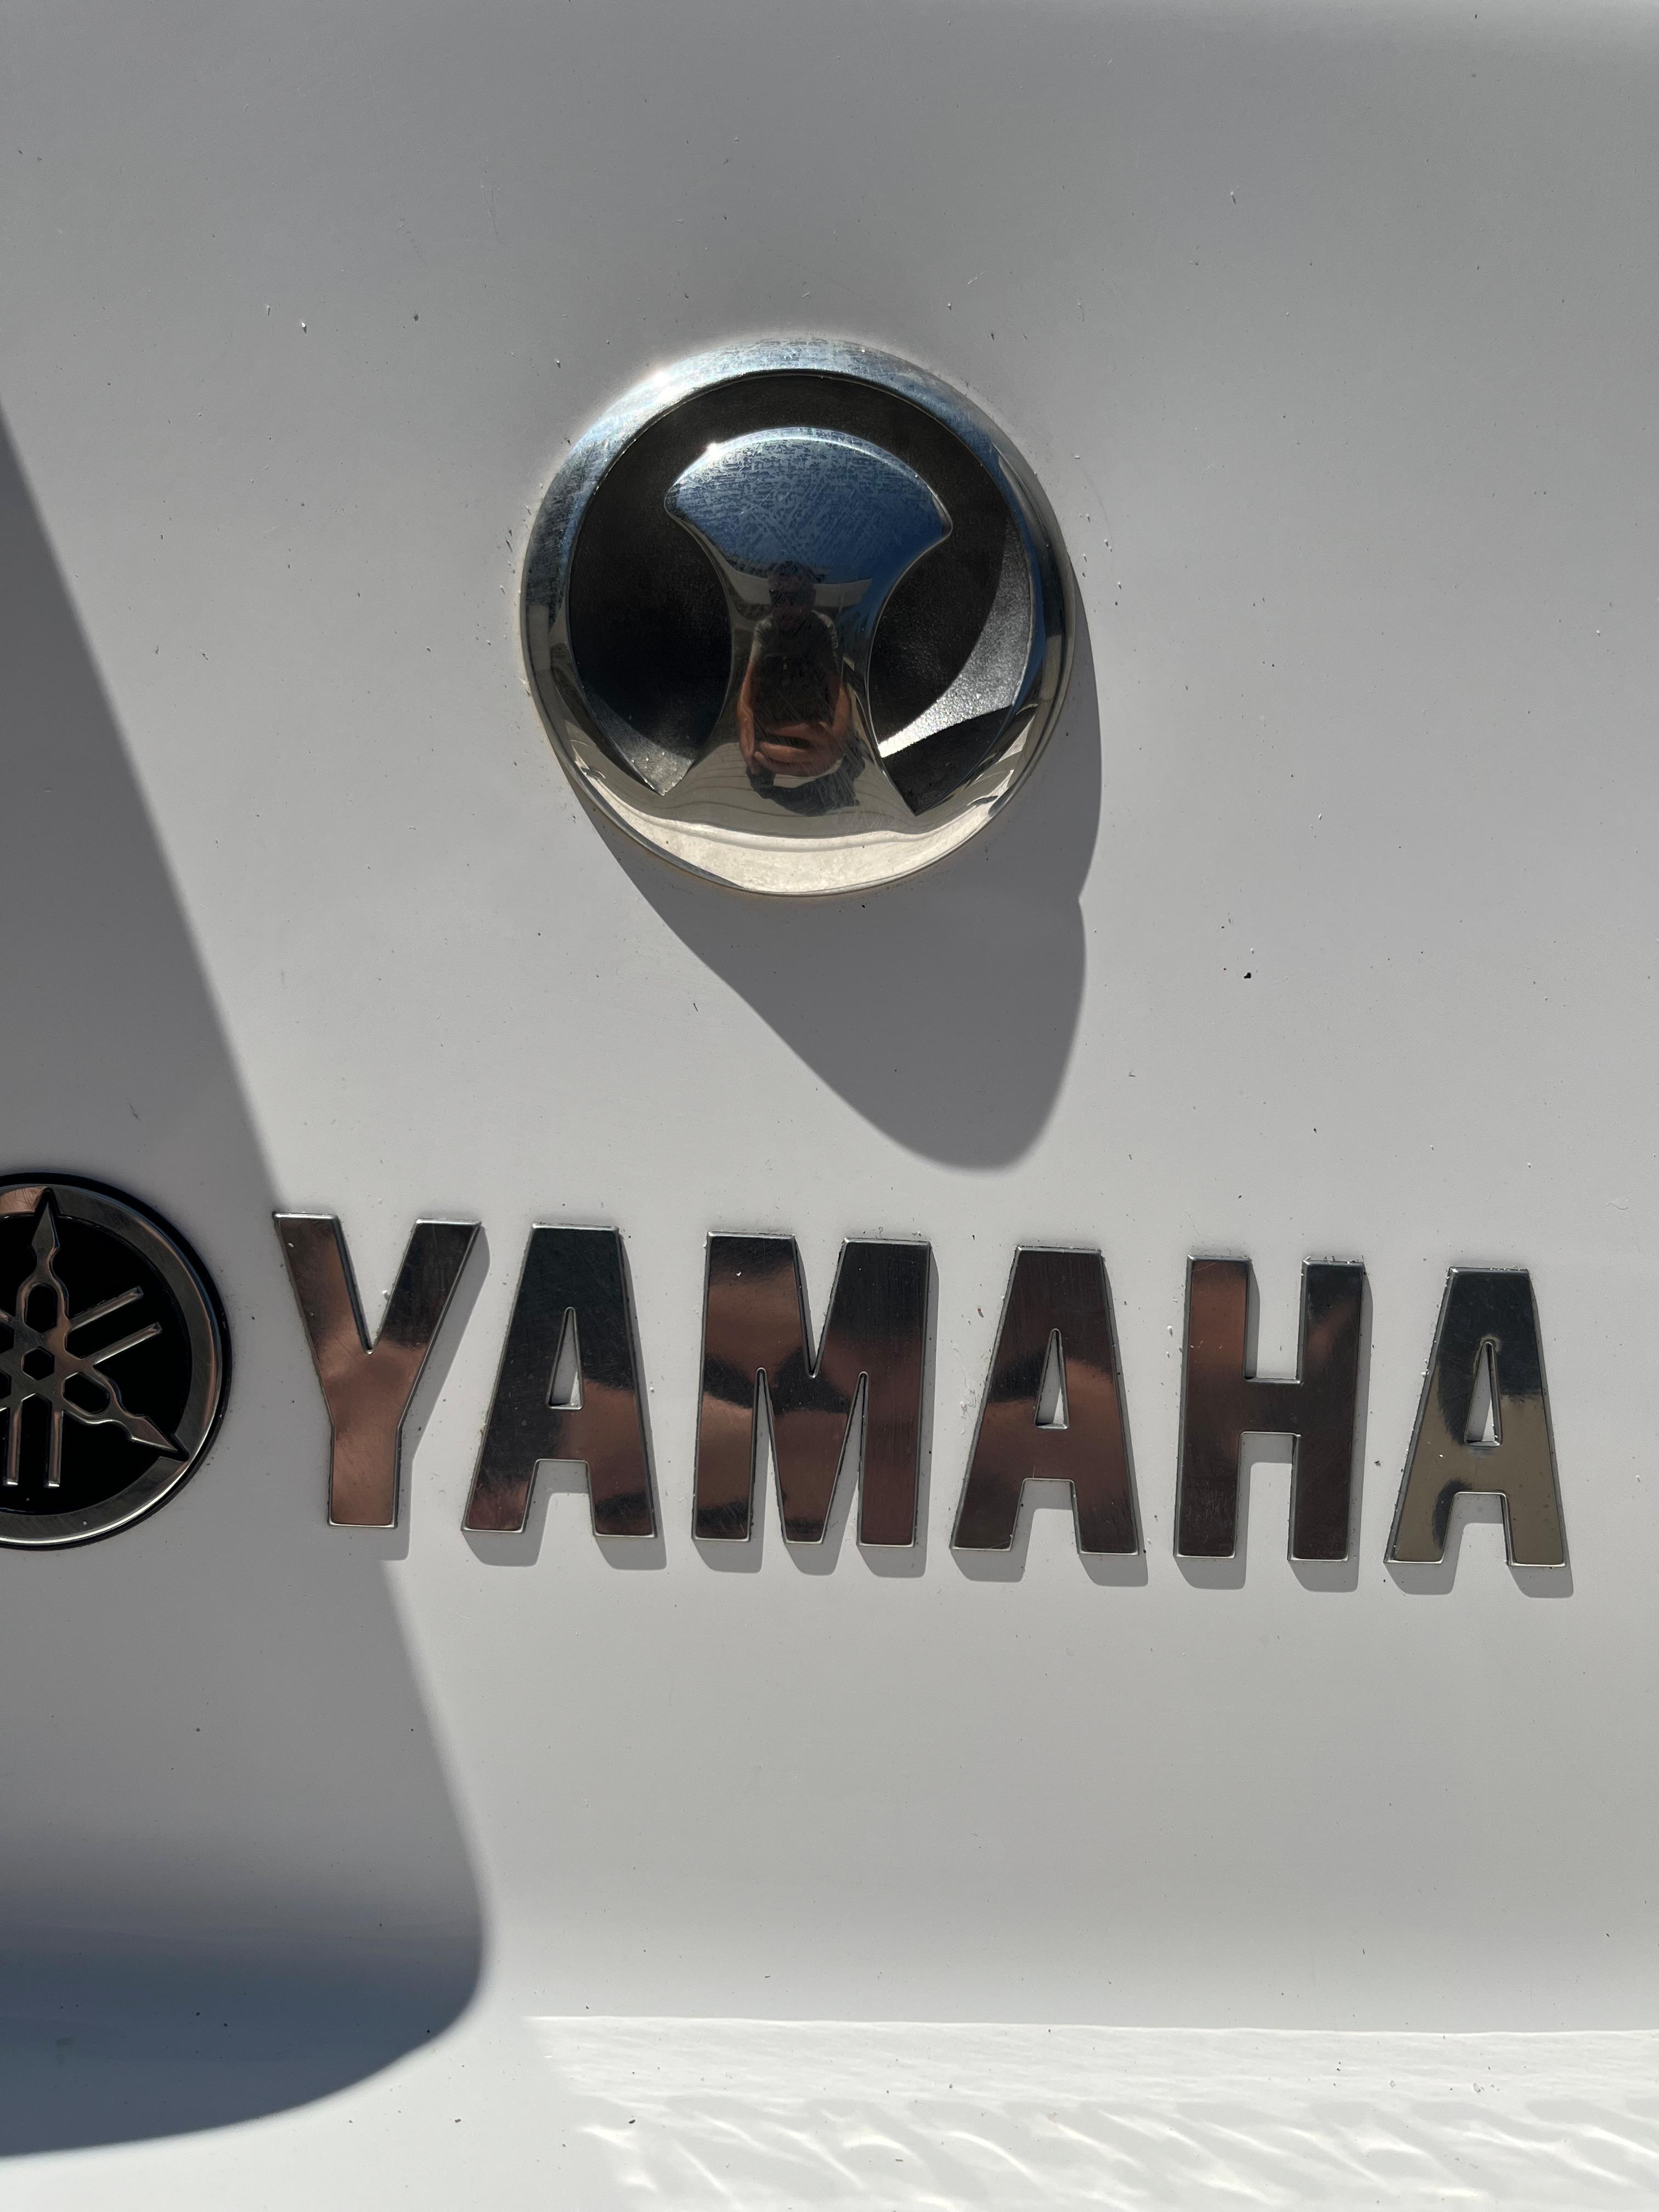 2021 Yamaha Boats AR190